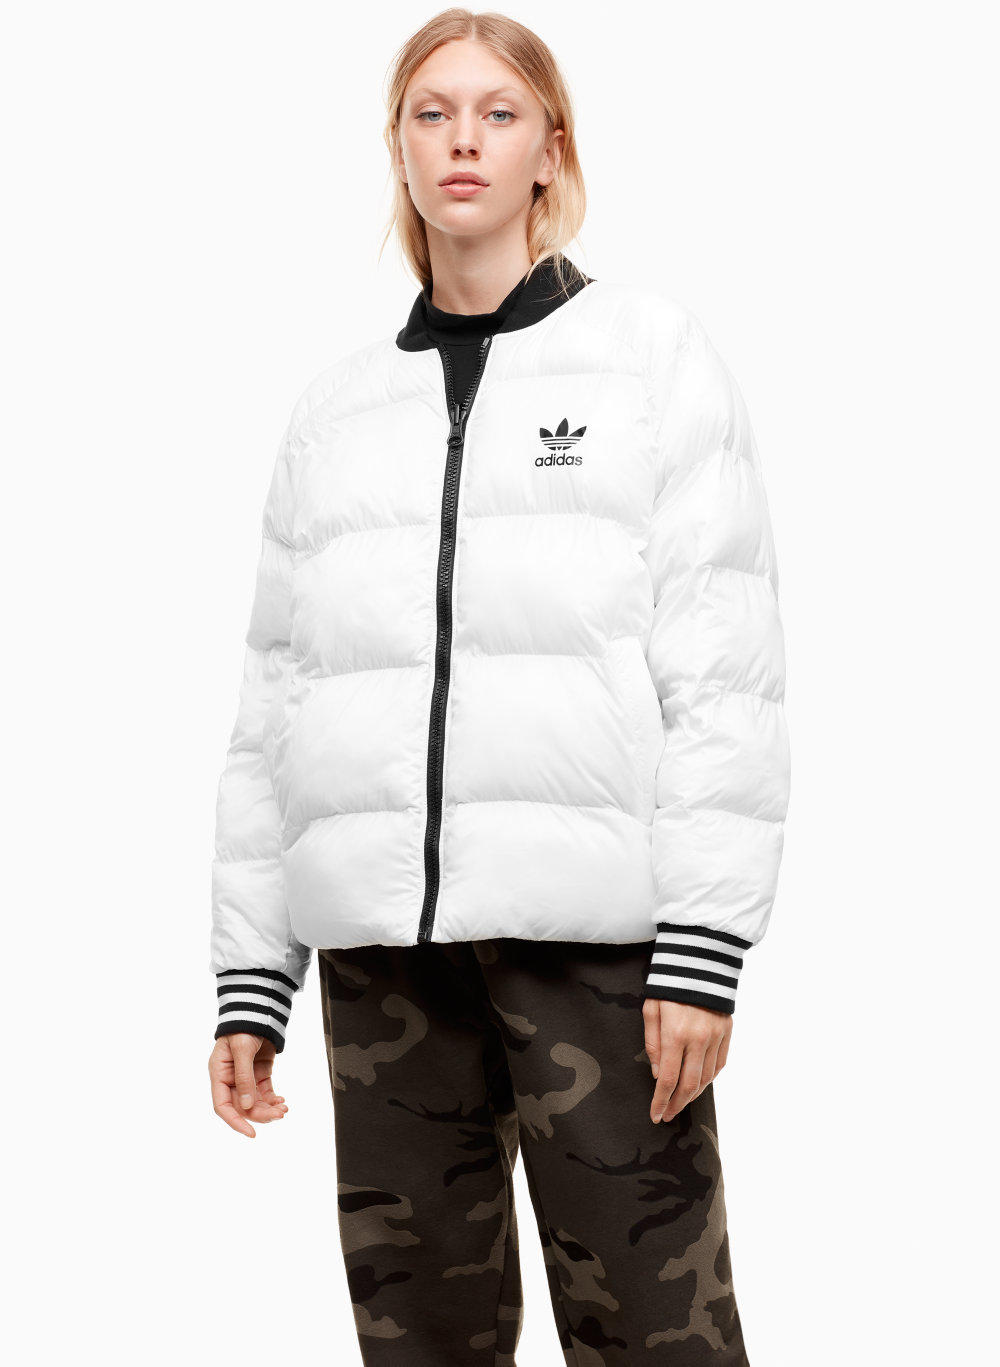 adidas white puffer jacket